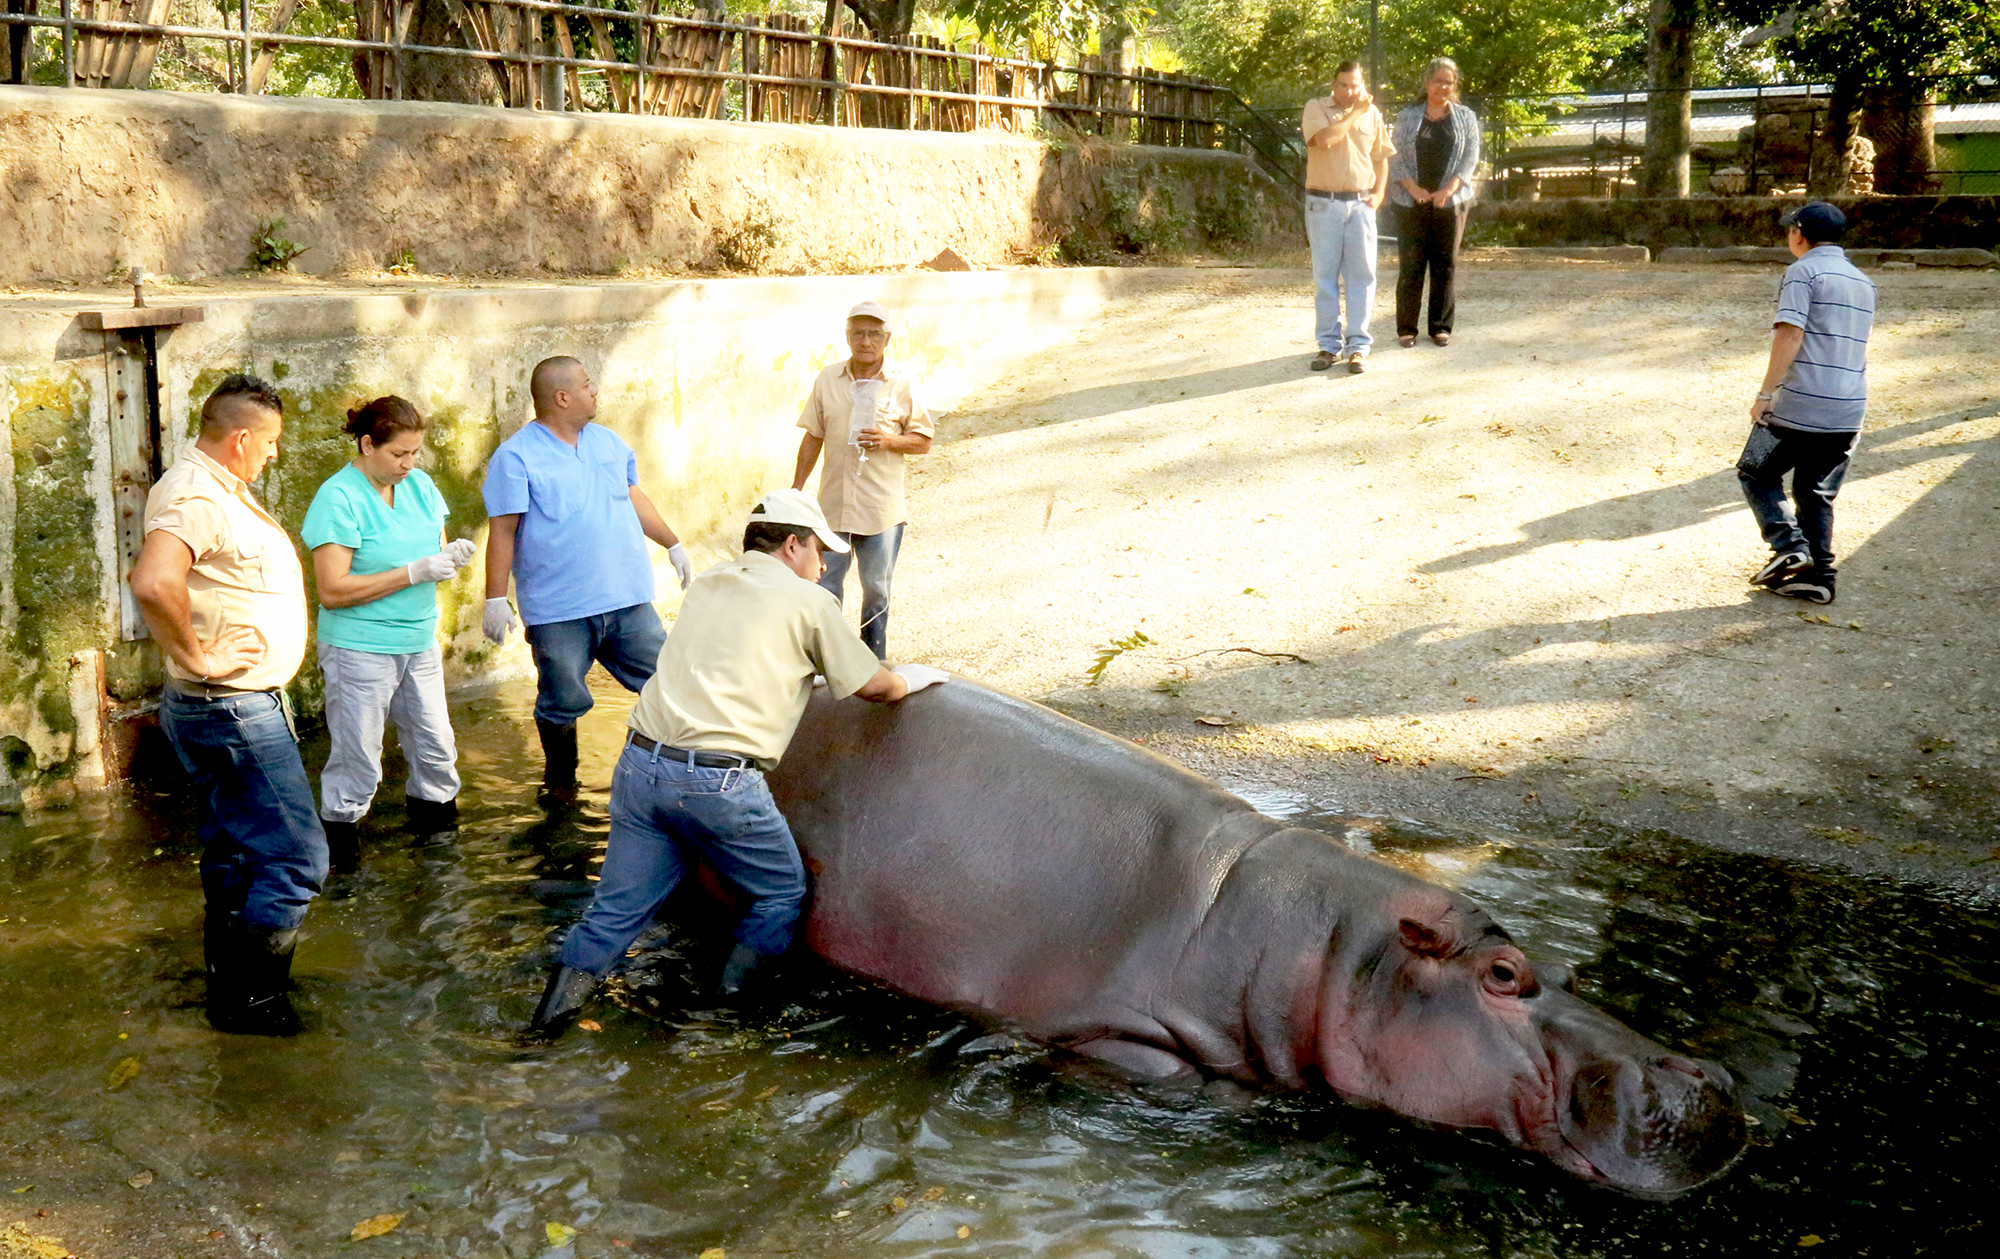 Hippopotamus attacked at El Salvador National Zoo